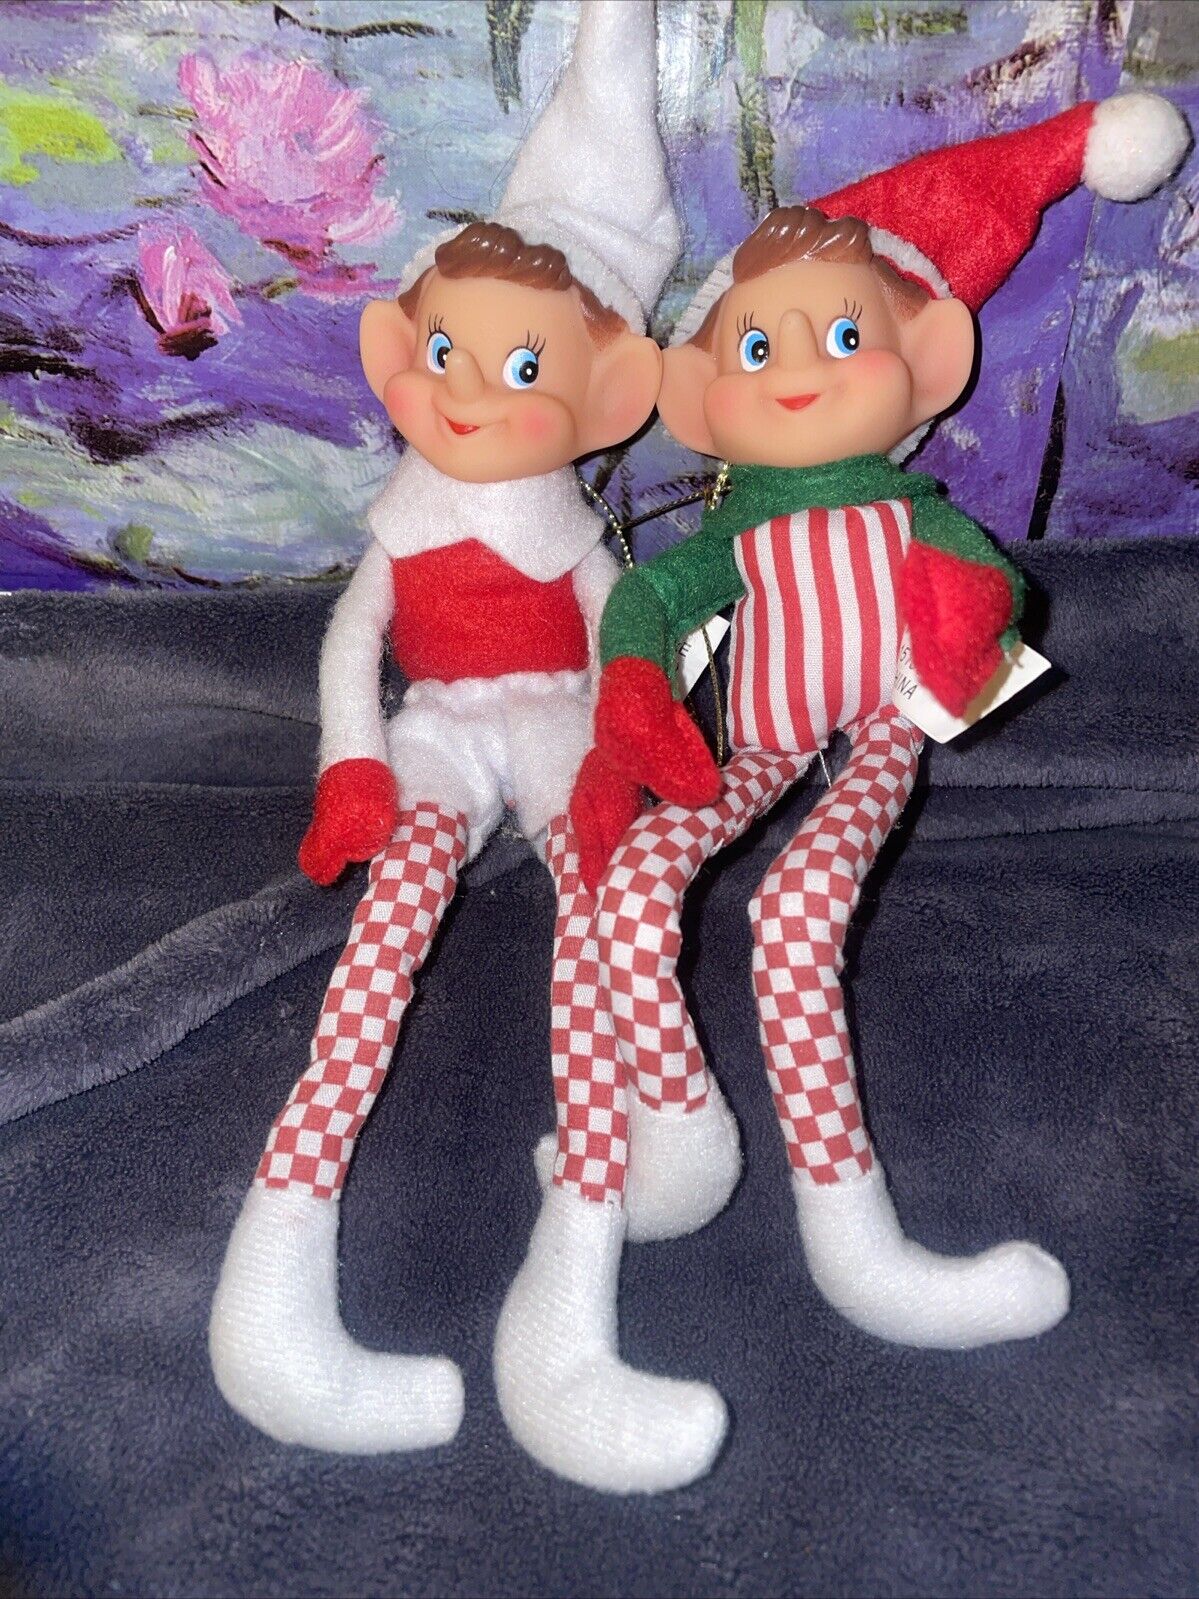 Lot of 2 Hobby Lobby Poseable Christmas Pixie Elf Elves Shelf Sitters or Hanging